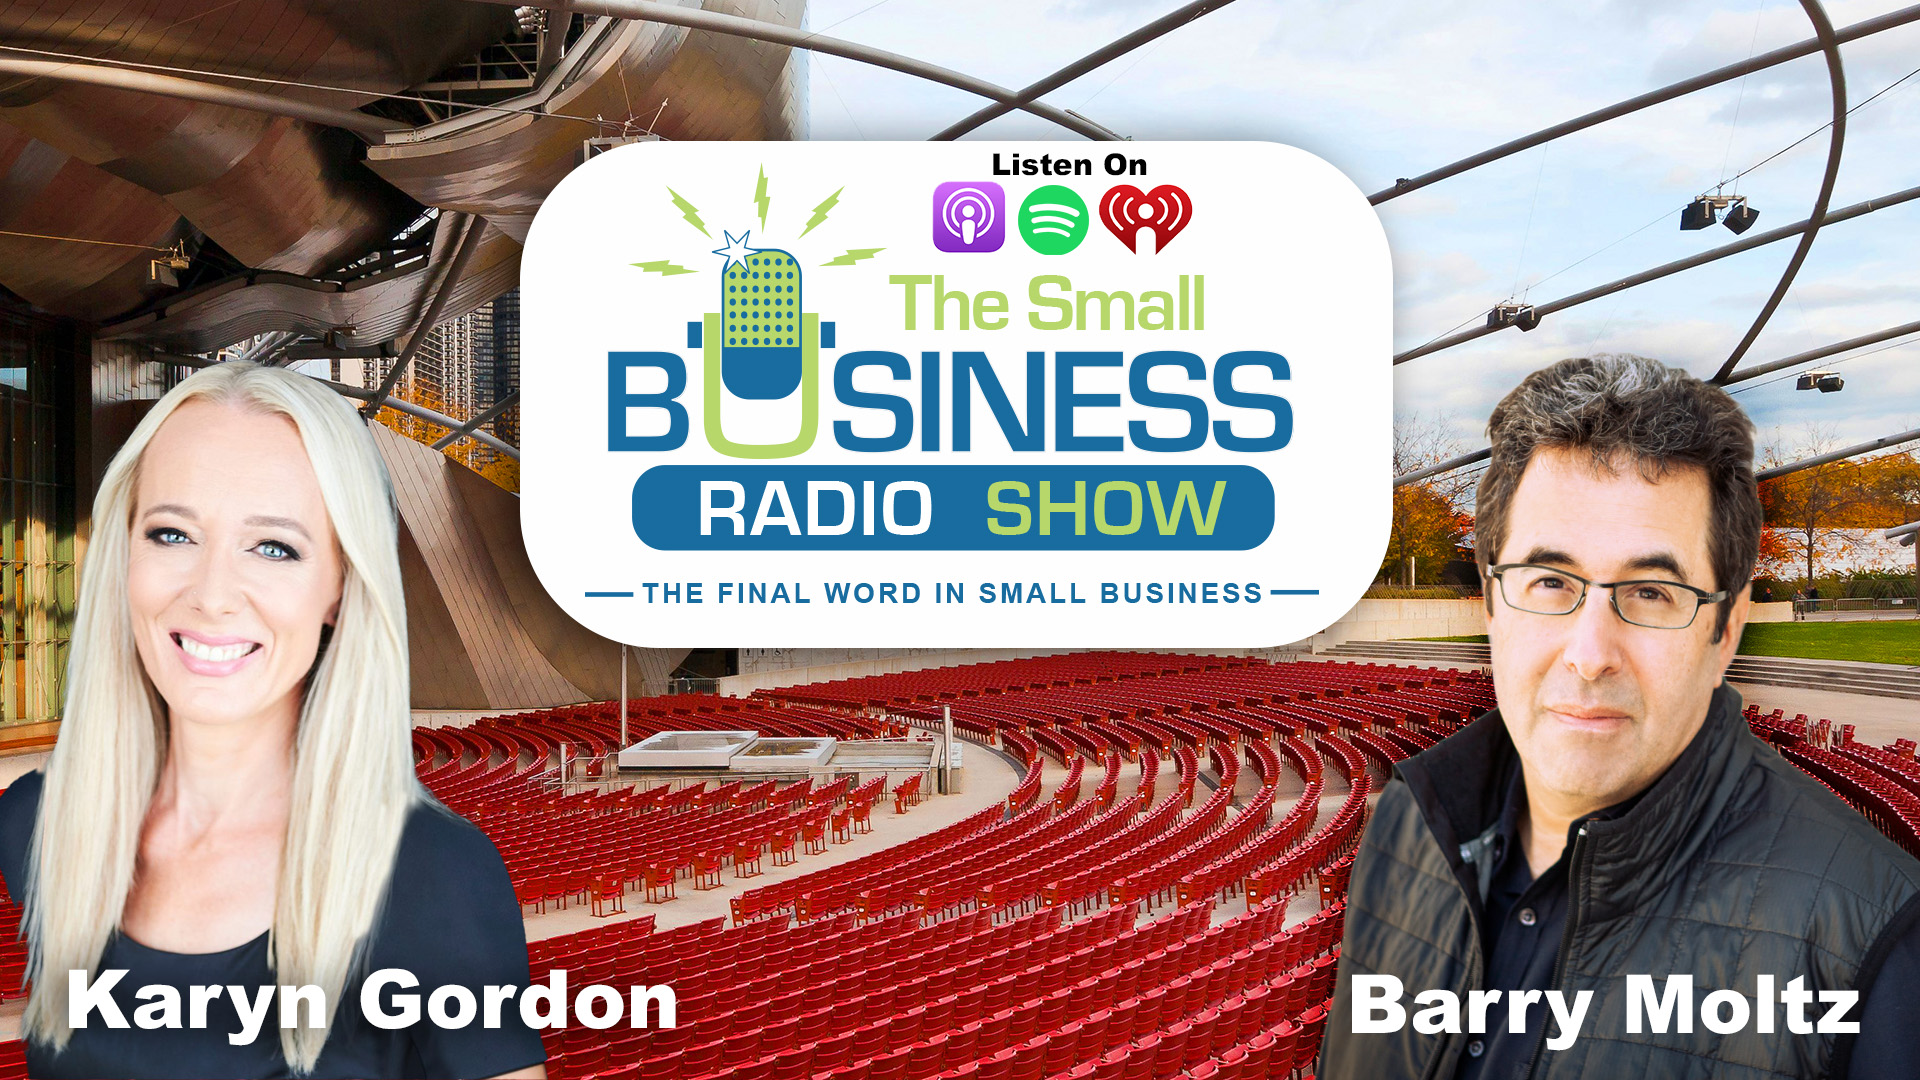 Karyn Gordon on The Small Business Radio Show